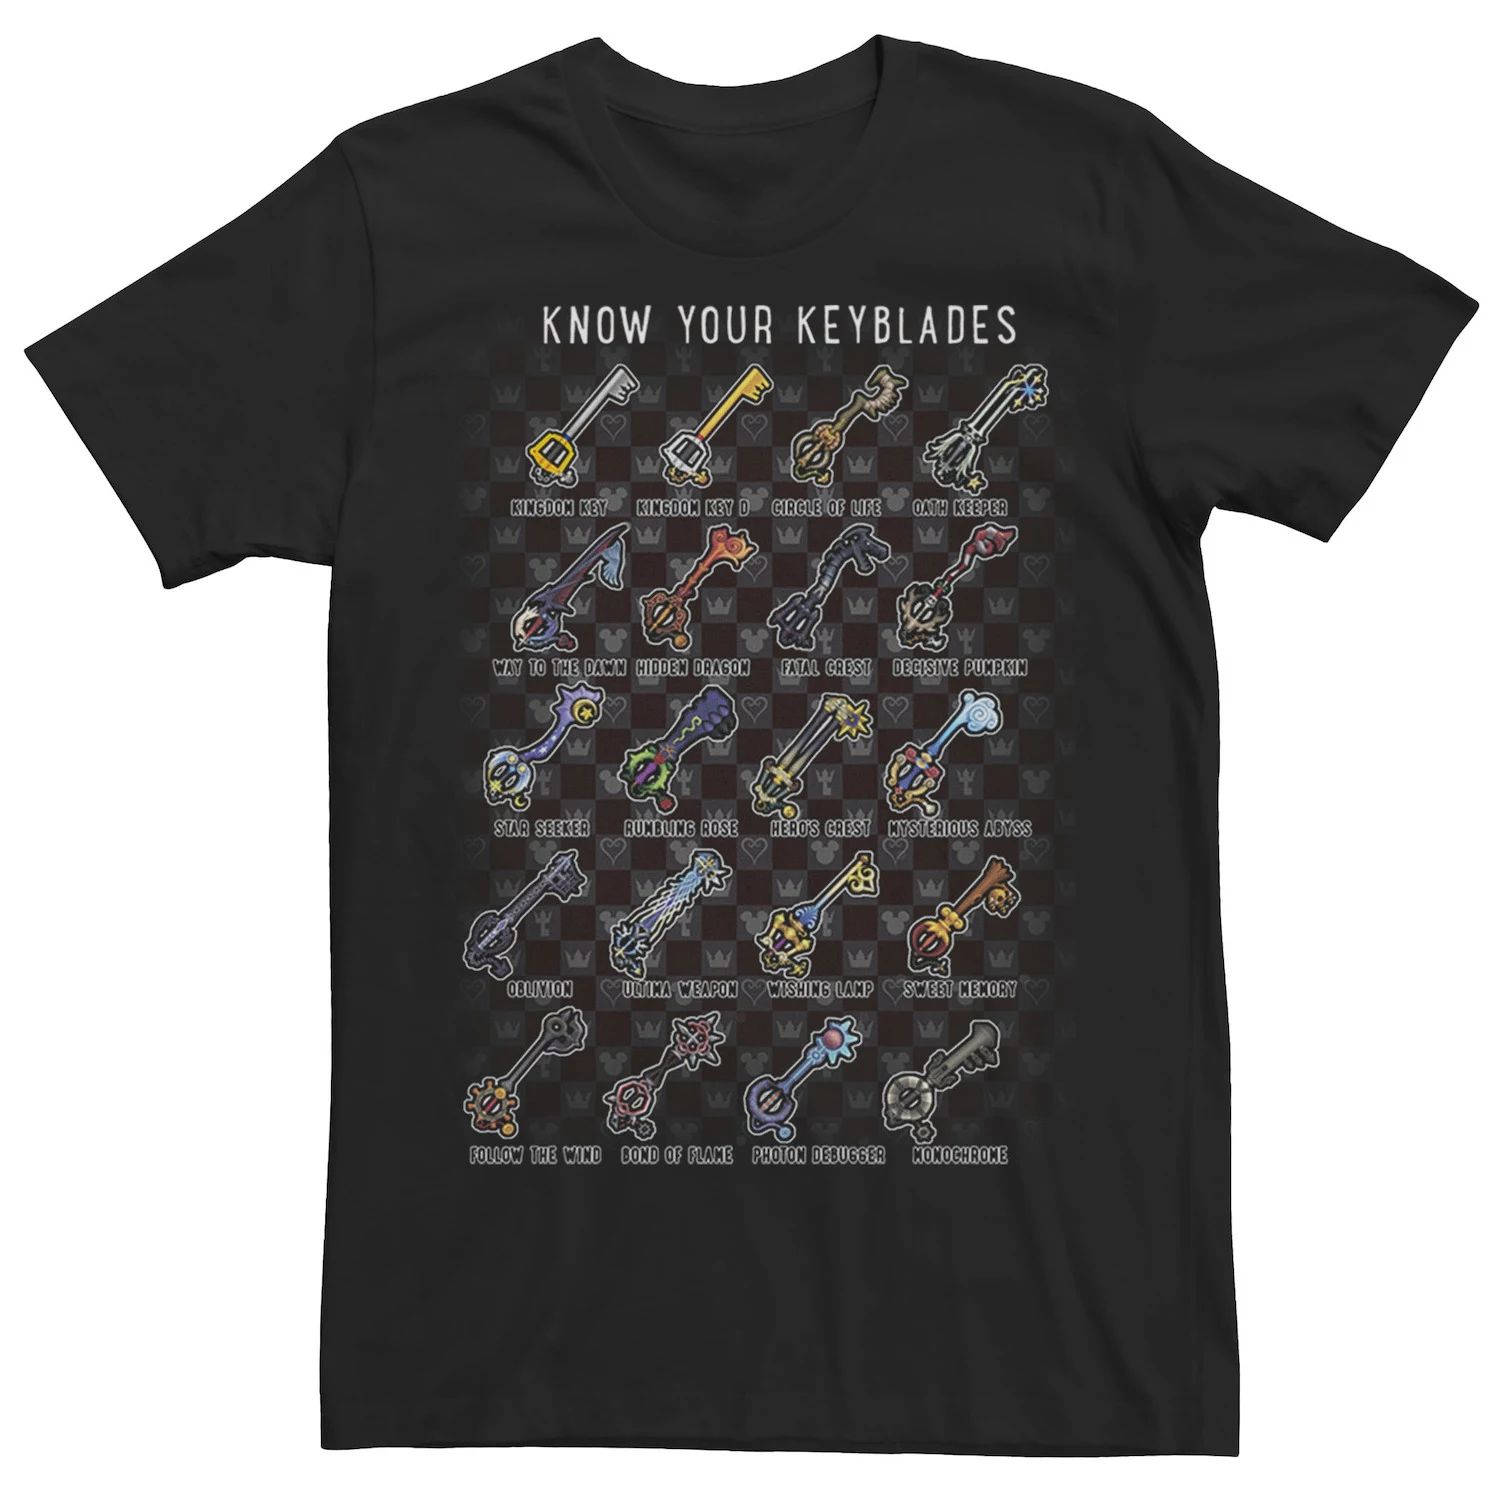 Мужская футболка с плакатом Kingdom Hearts Keyblades Chart Licensed Character